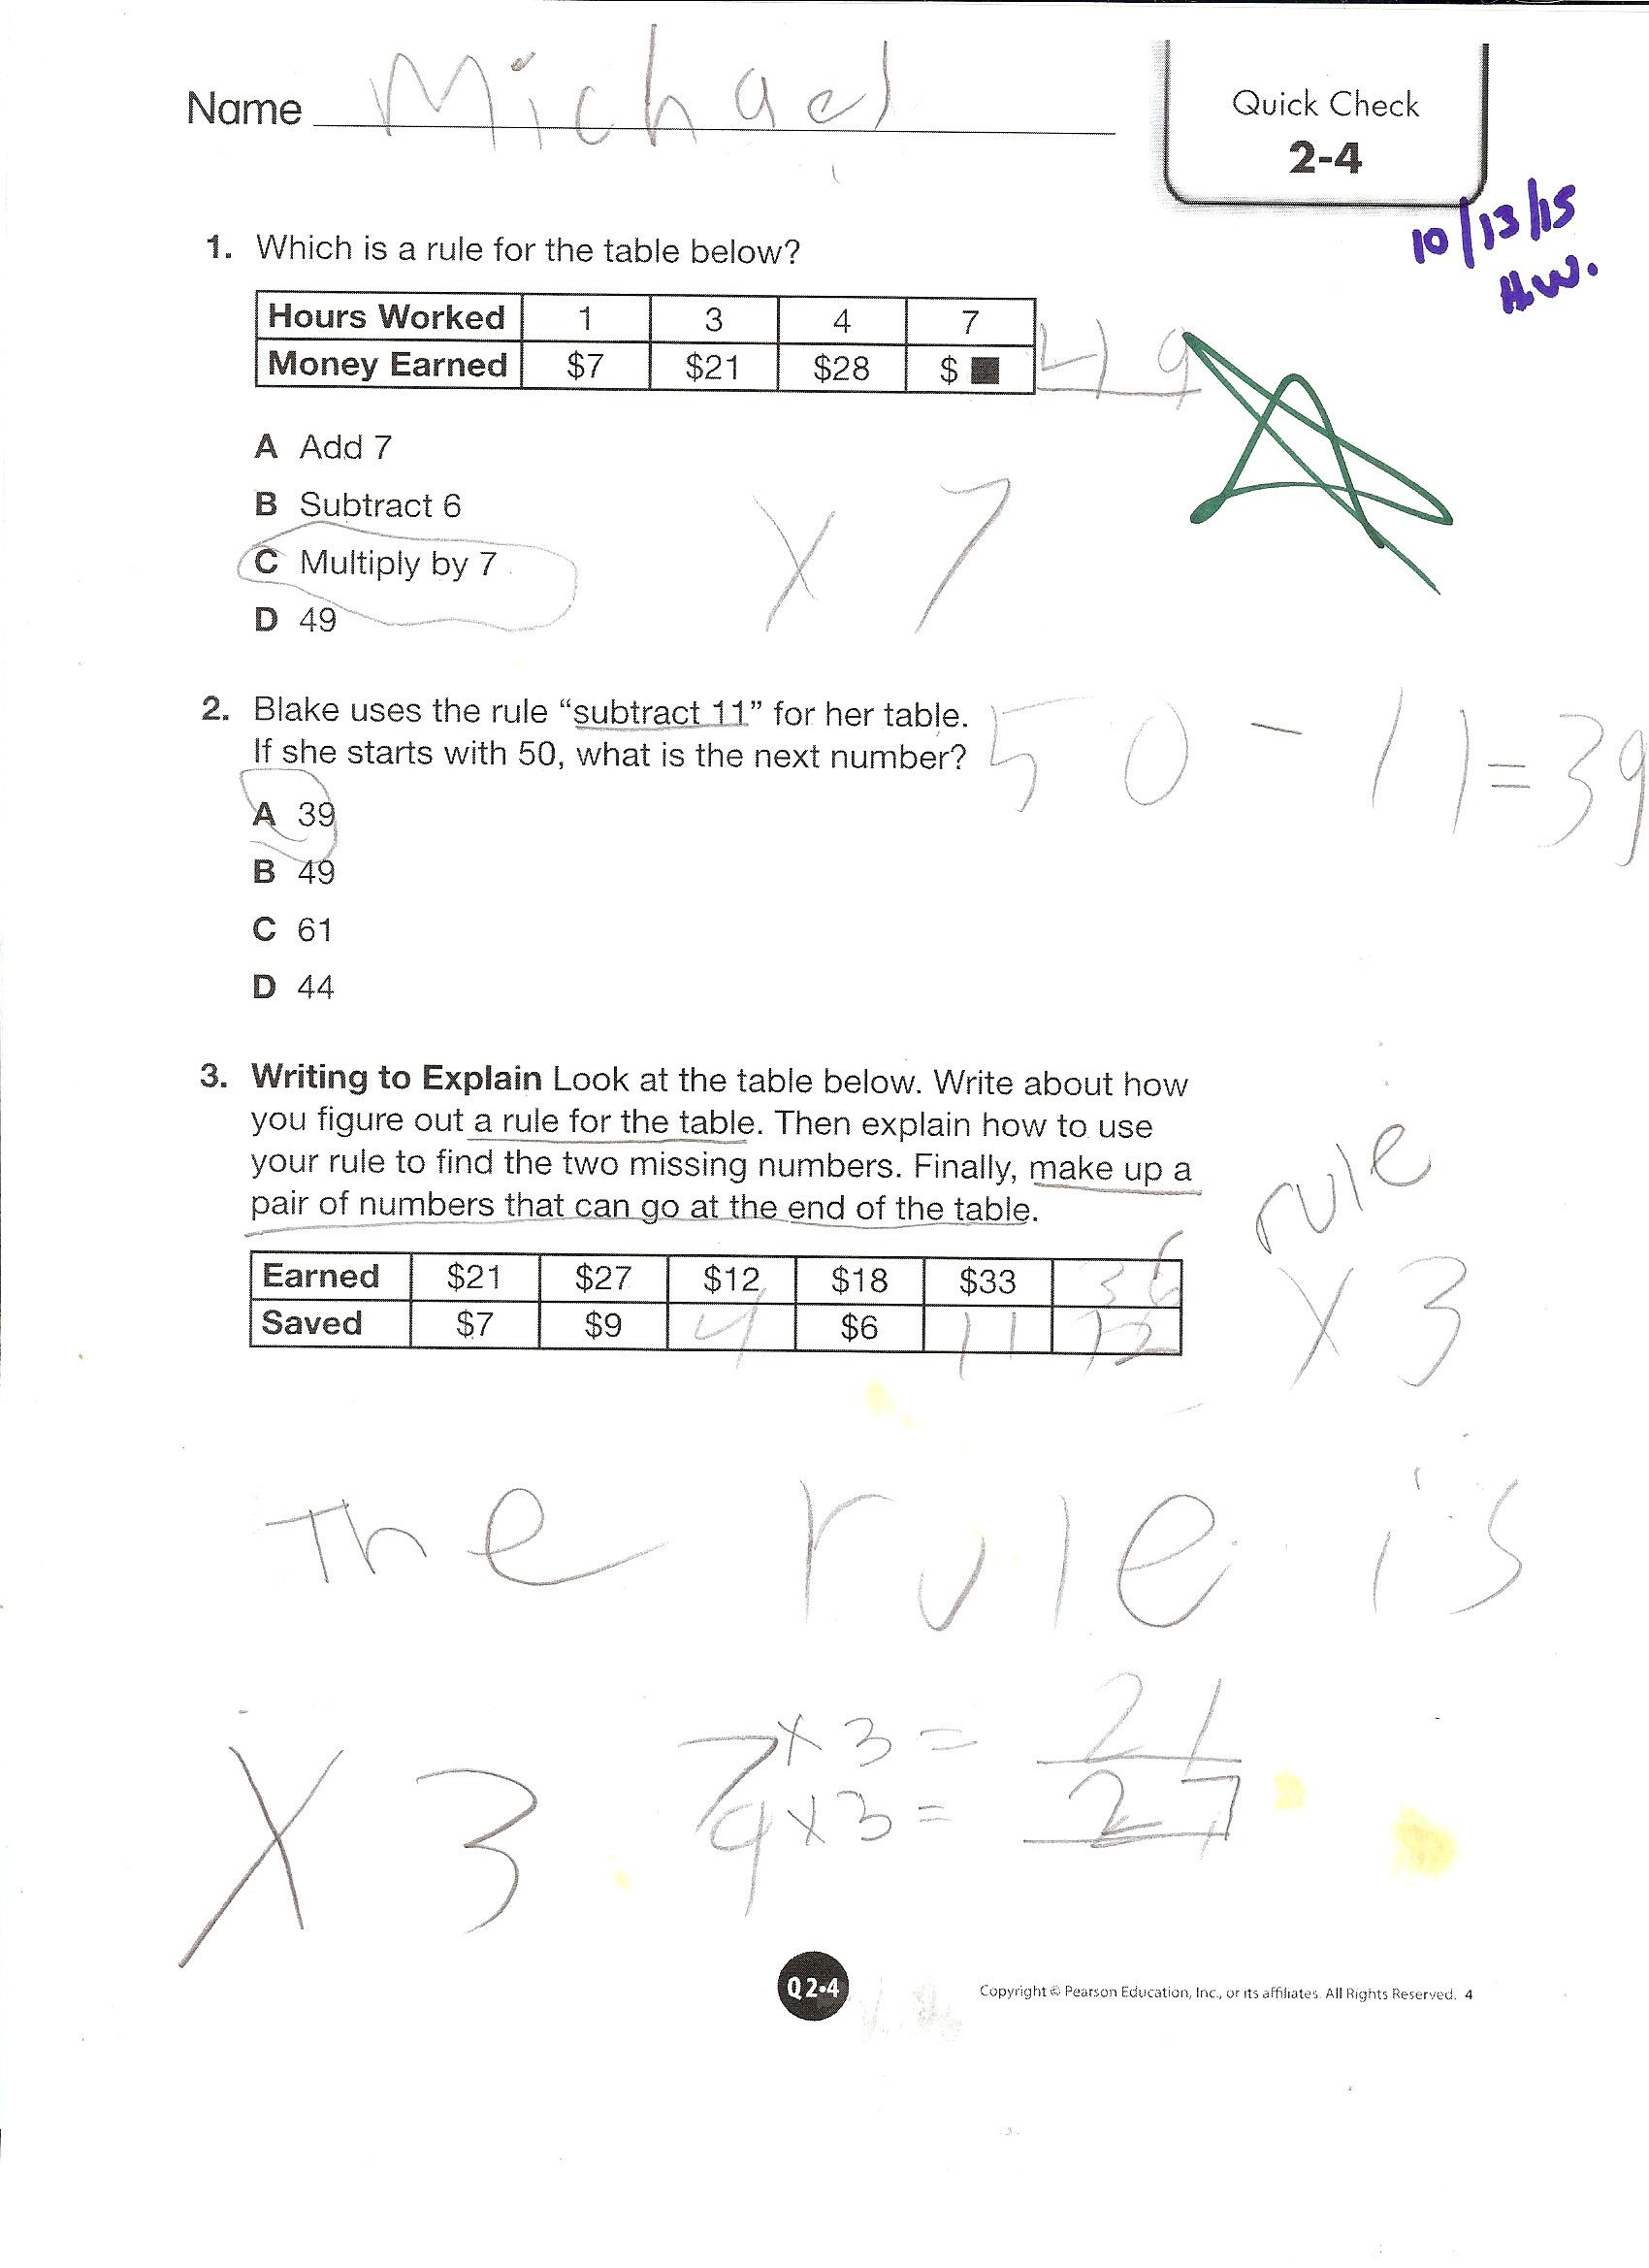 Envision Math Grade 4 Topic 2-4 Quick Check | Math